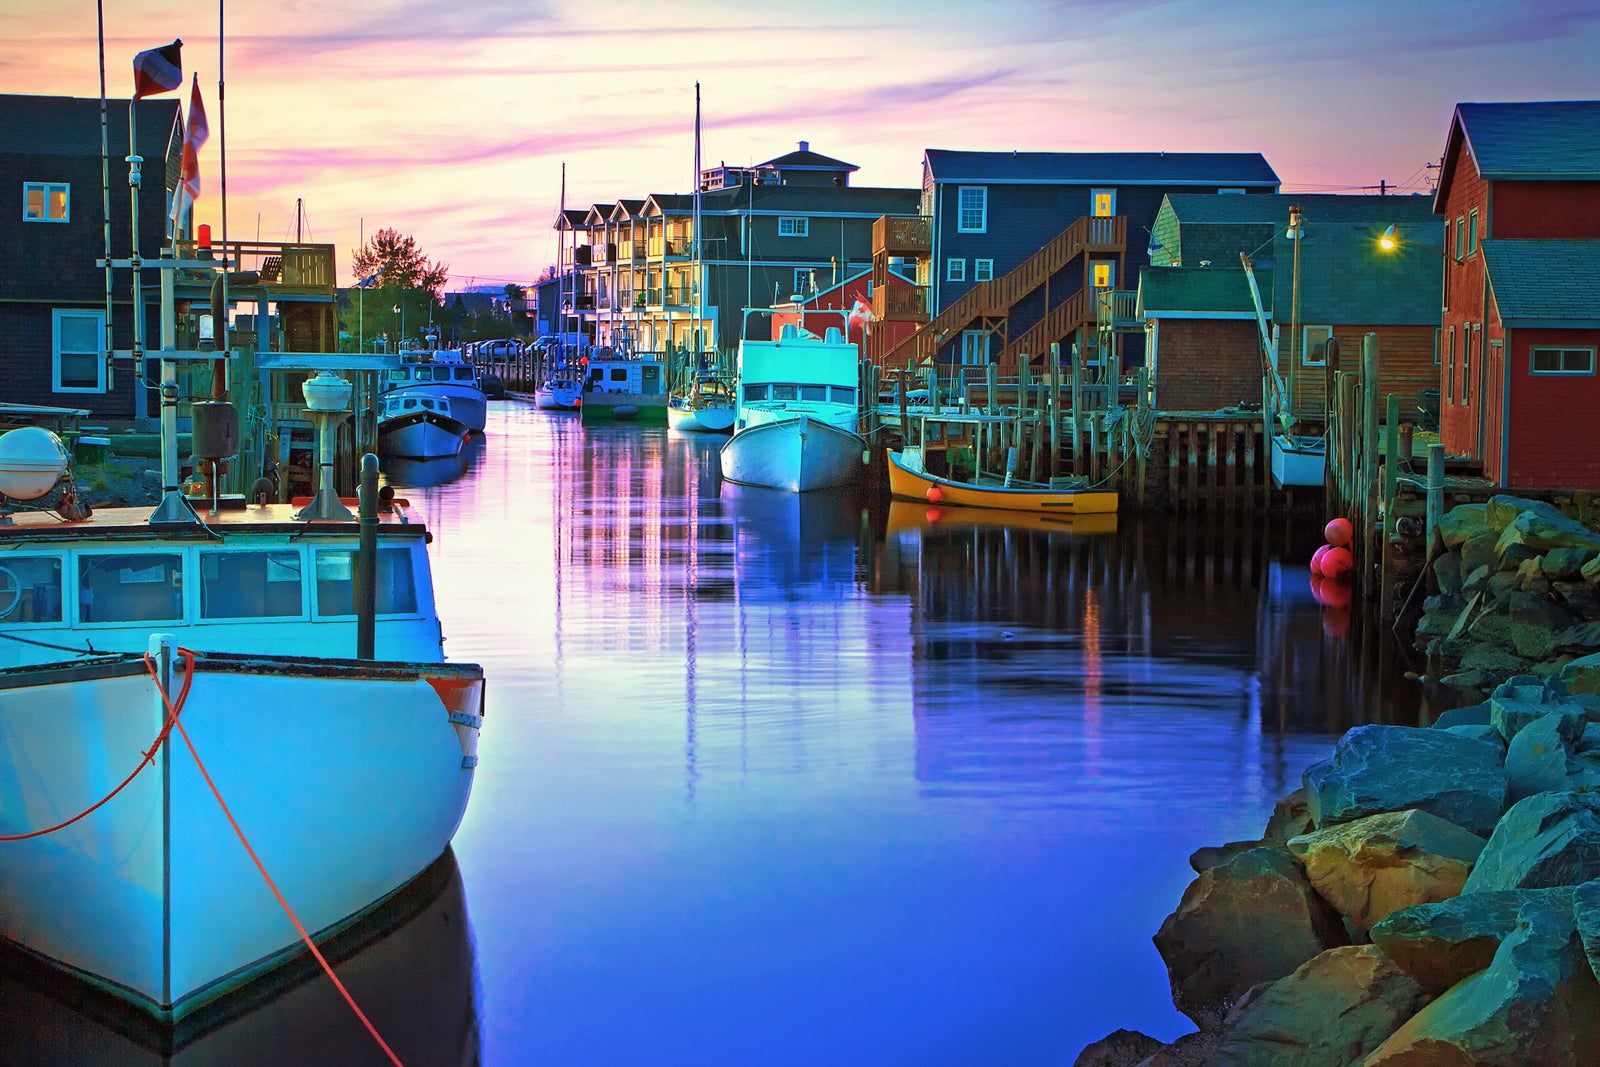 Fisherman's Cover, Halifax, Nova Scotia - boats at dusk